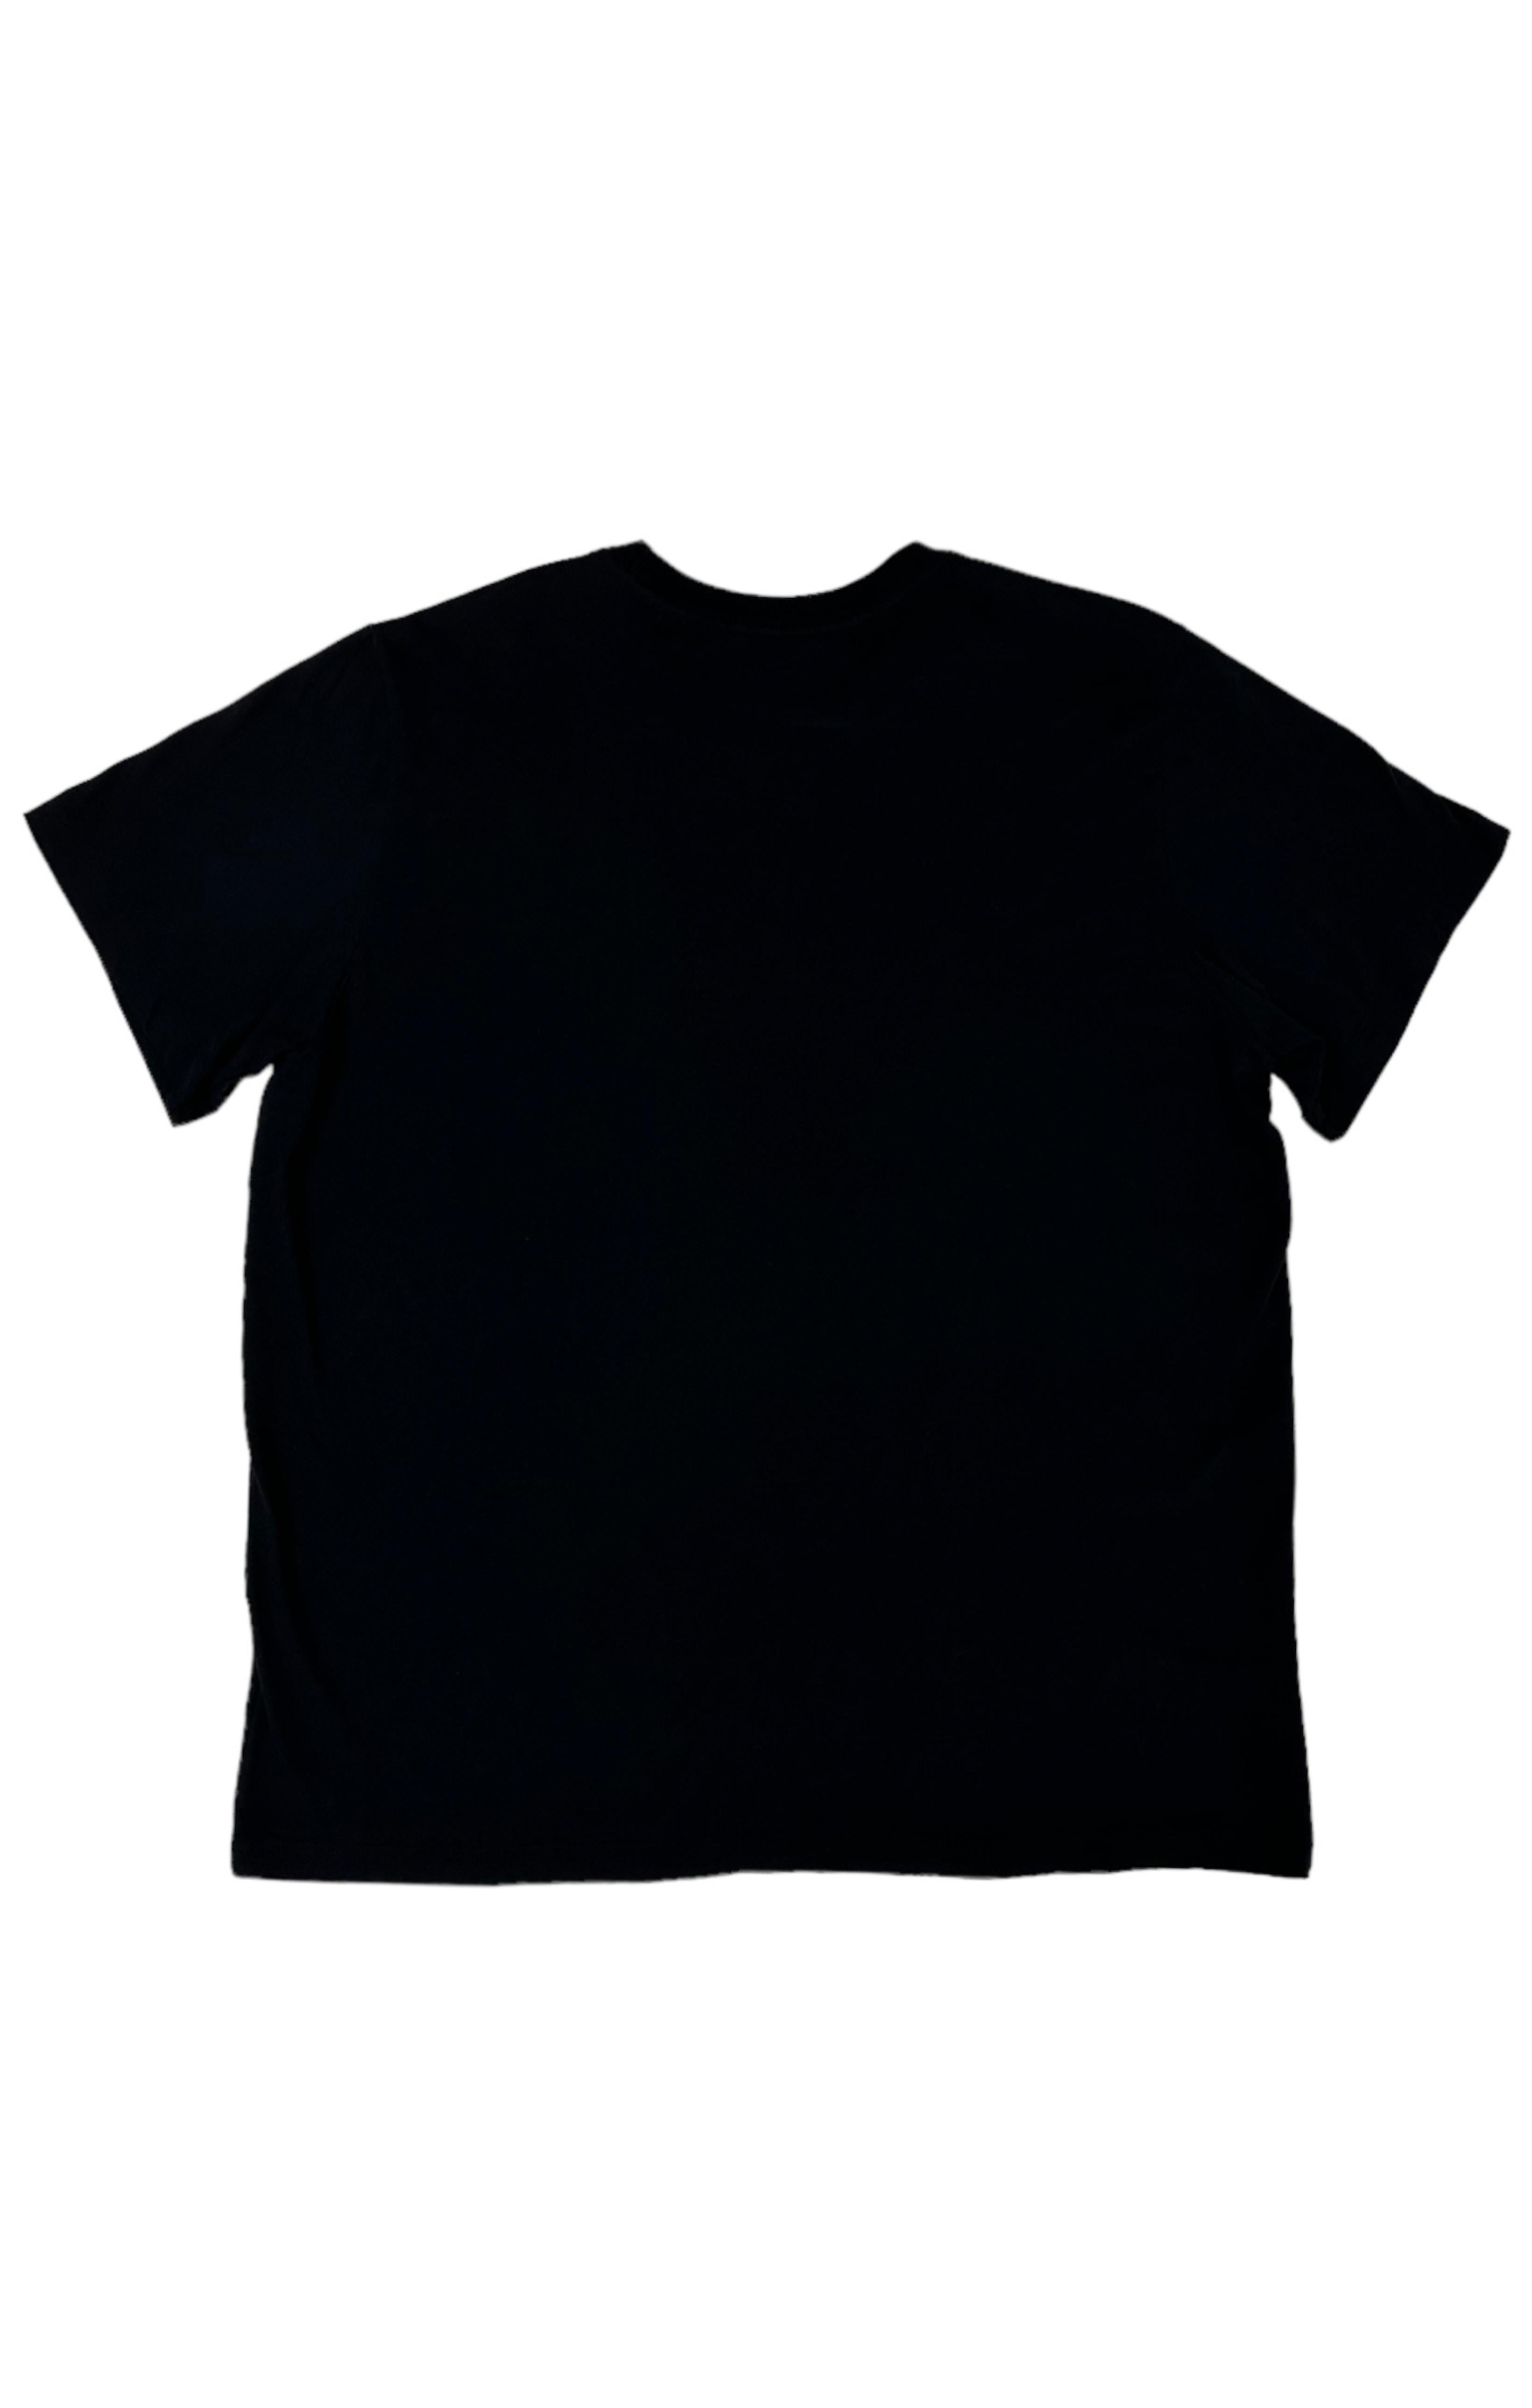 NIKE T-shirt Size: 2XL